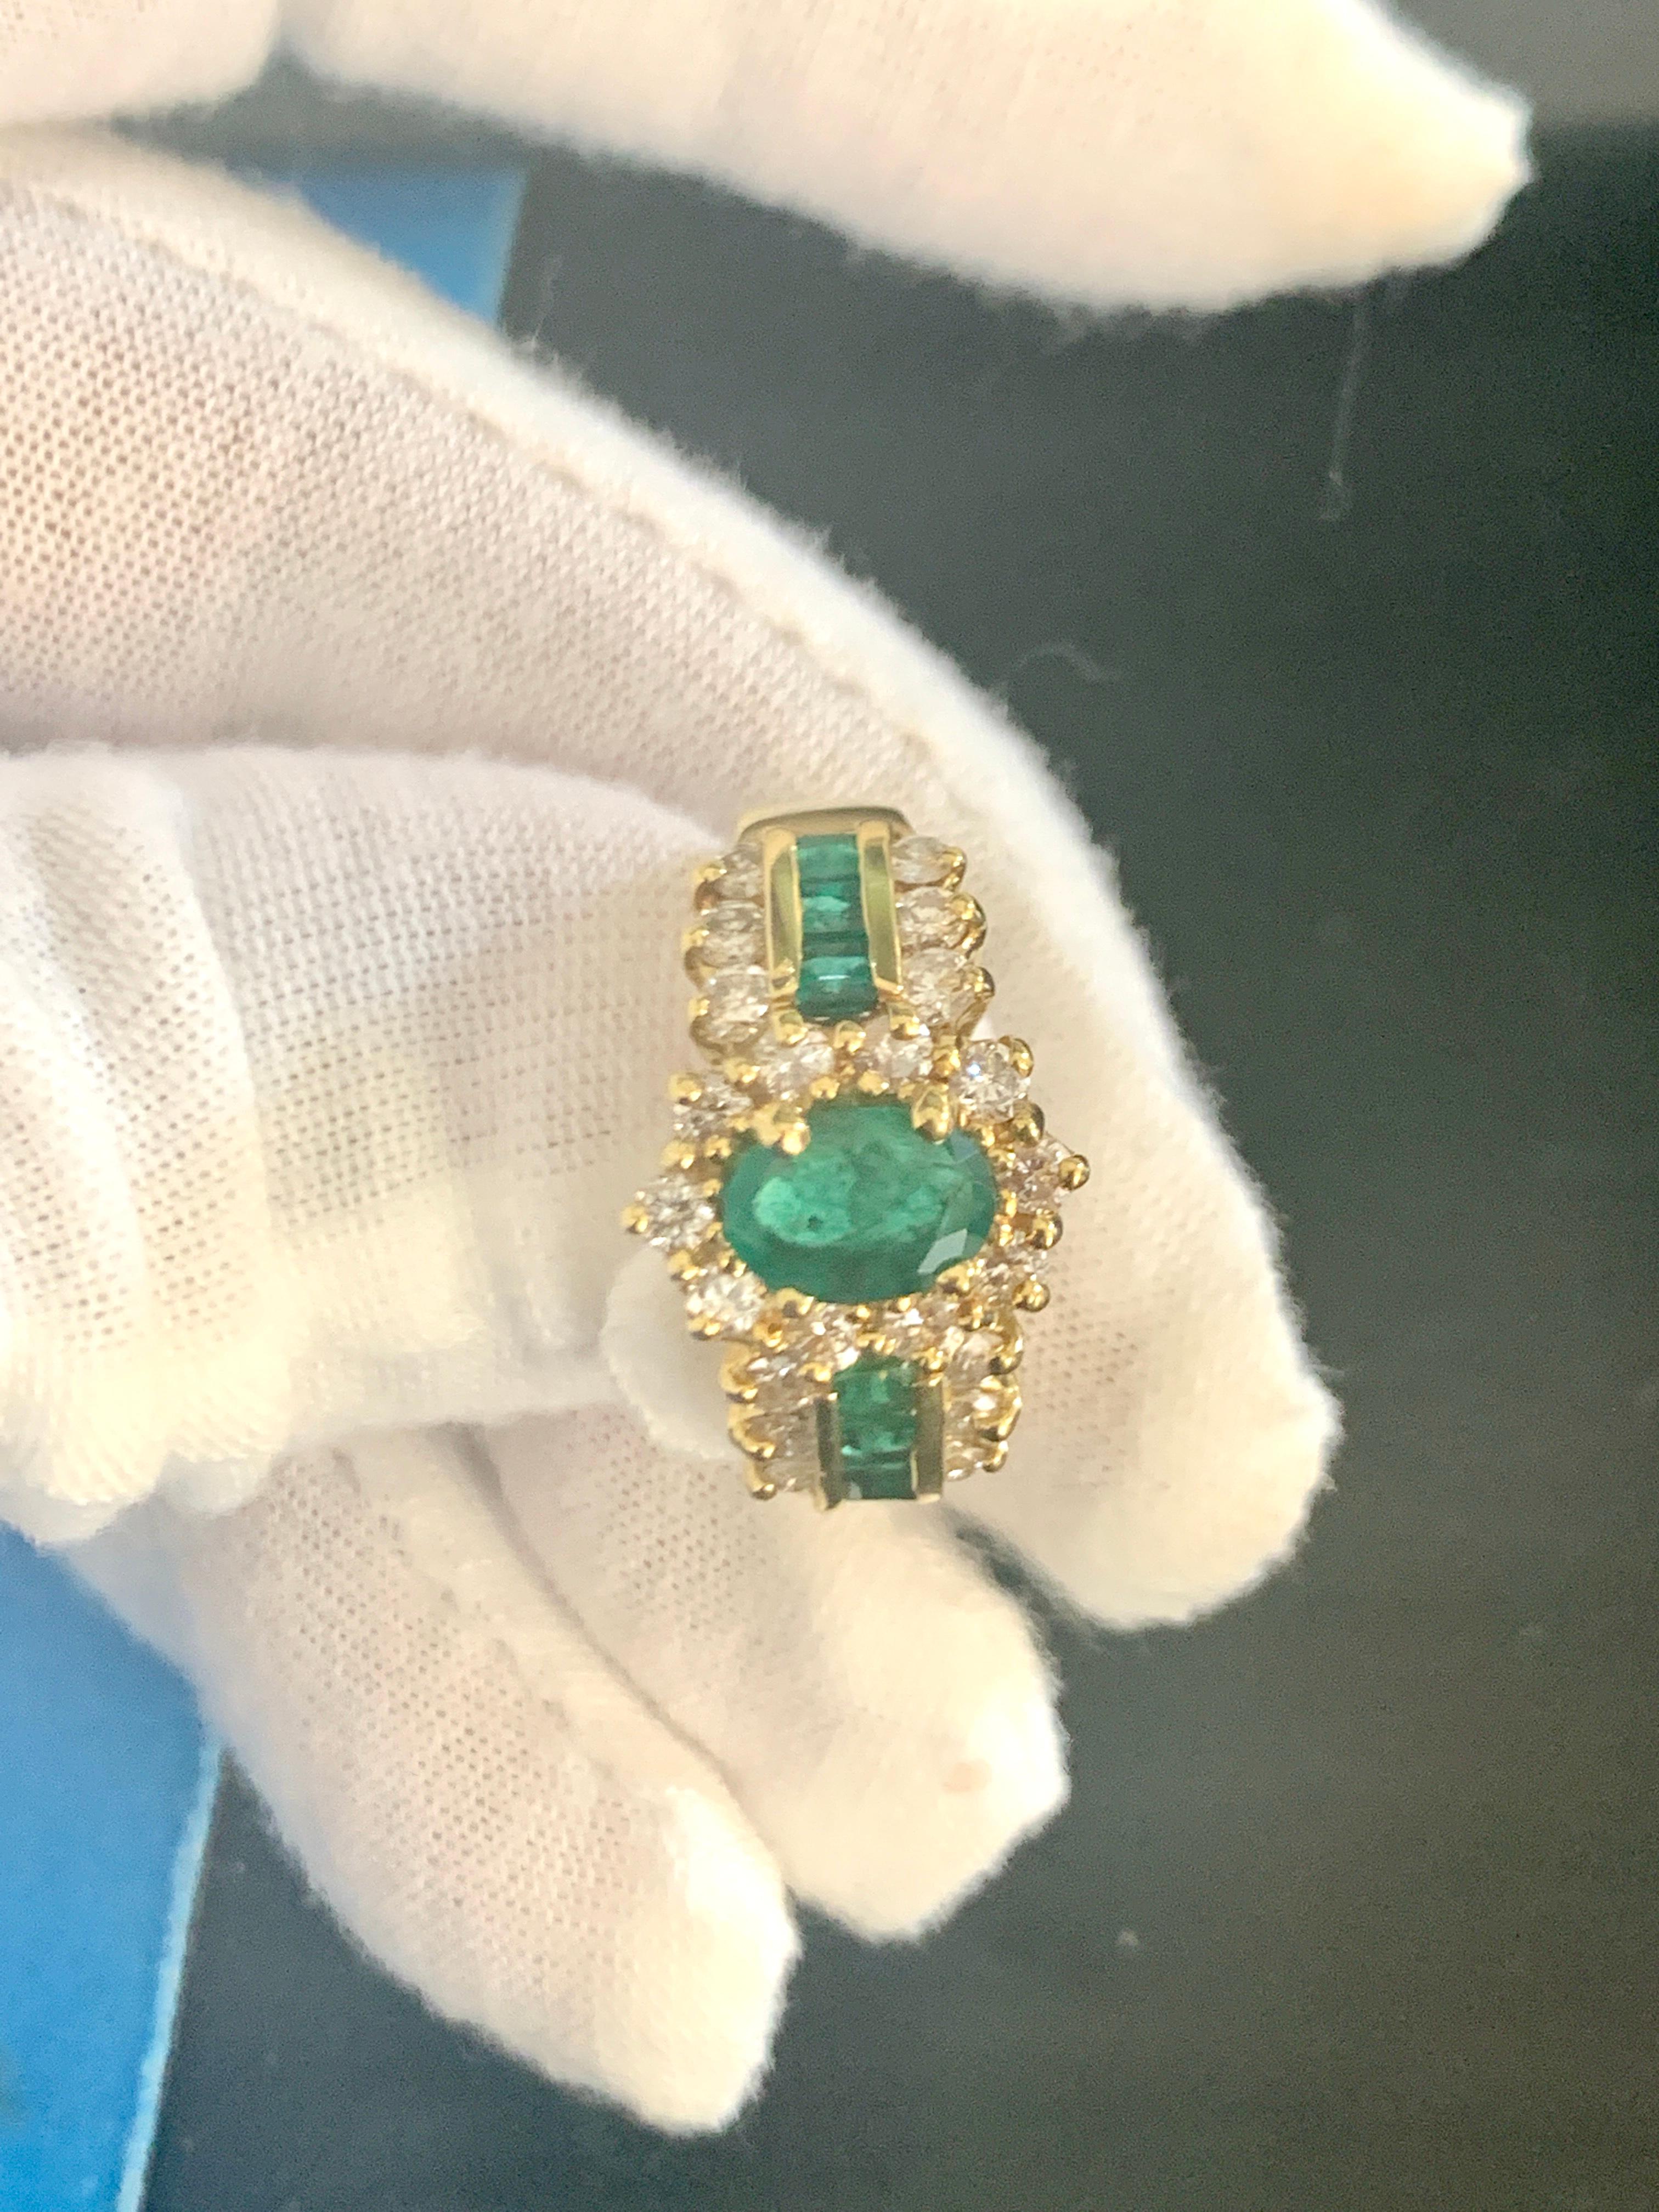 1 Carat Oval Cut Emerald and 1.0 Carat Diamond Ring 18 Karat Yellow Gold For Sale 6